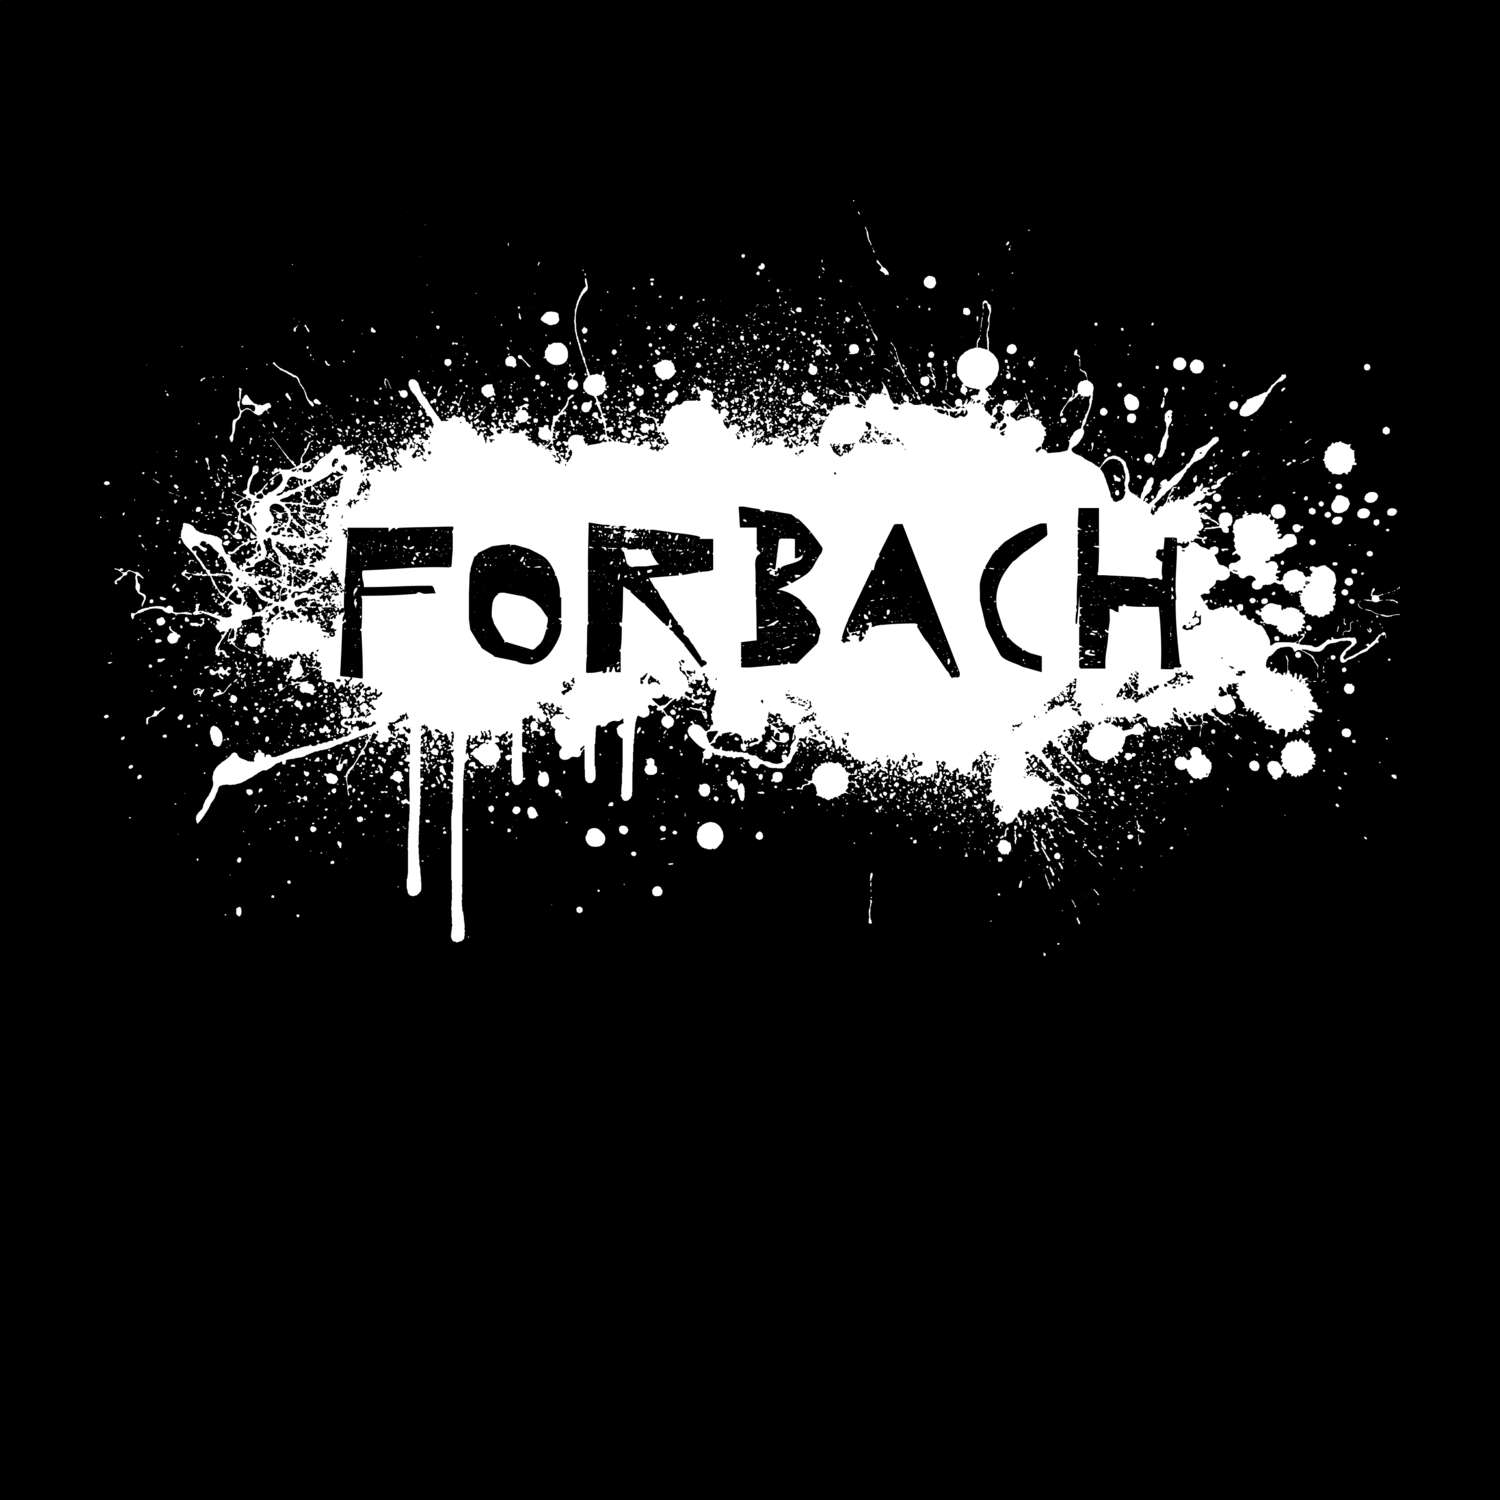 Forbach T-Shirt »Paint Splash Punk«